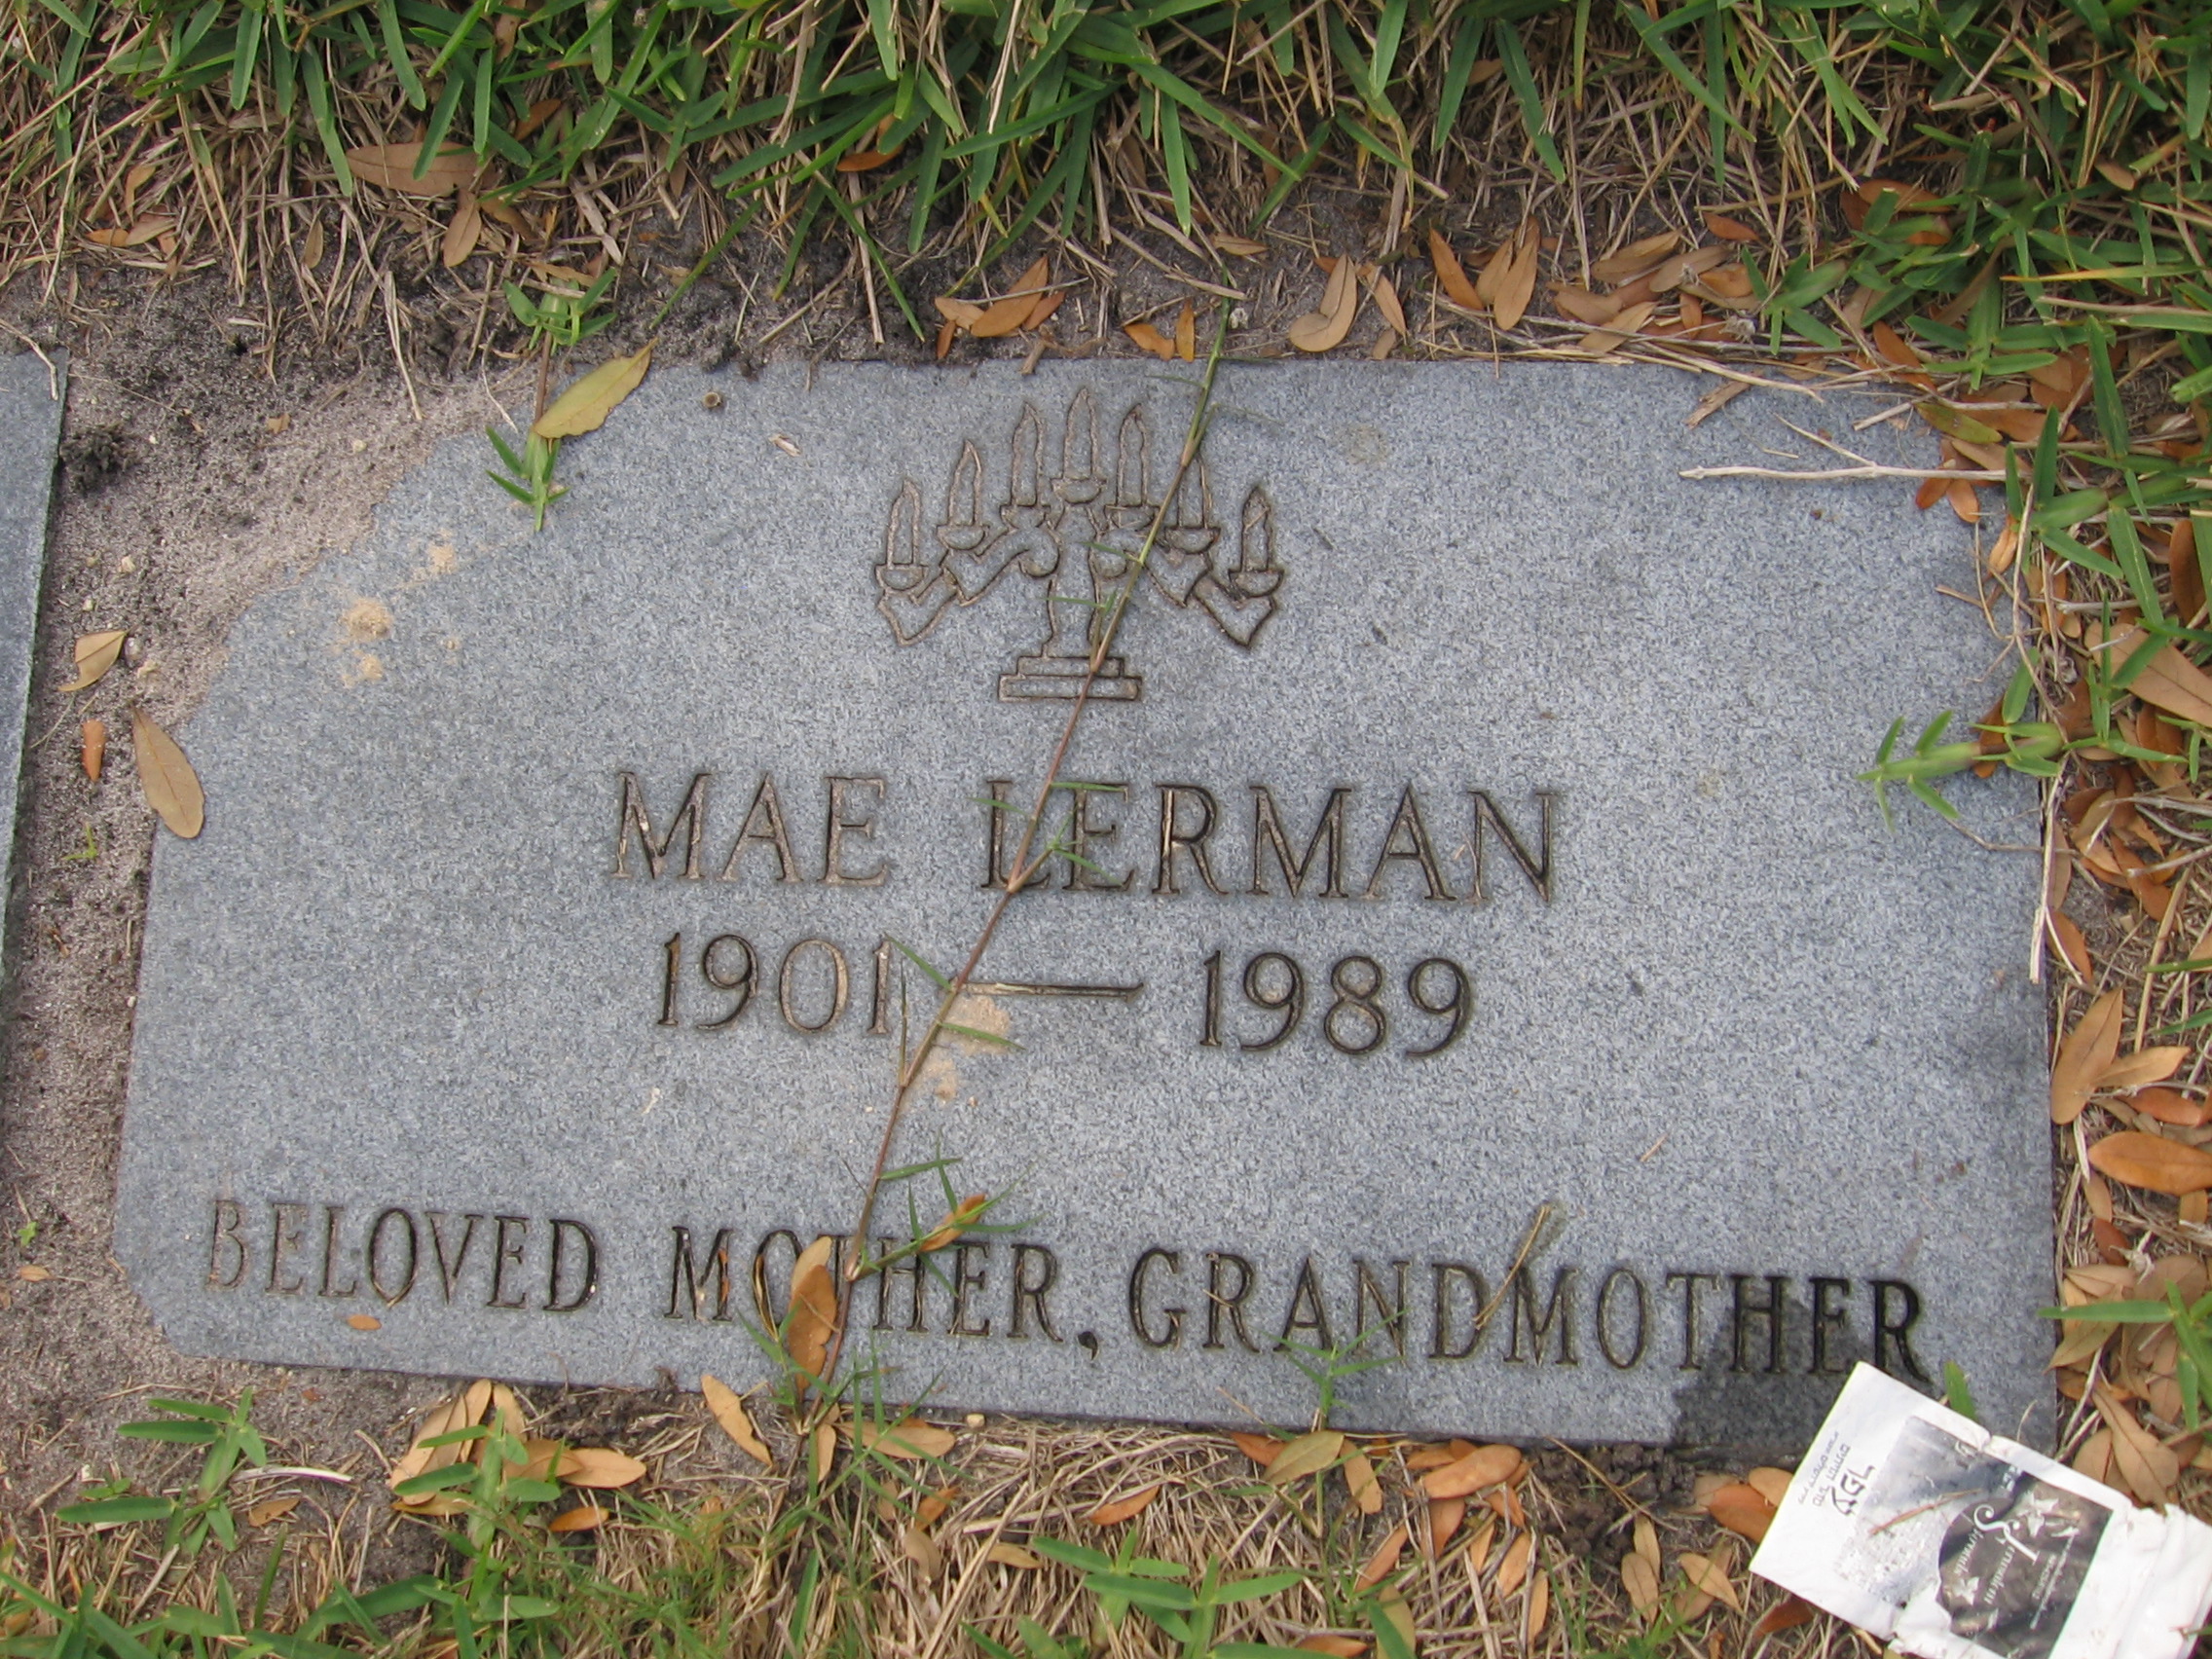 Mae Lerman